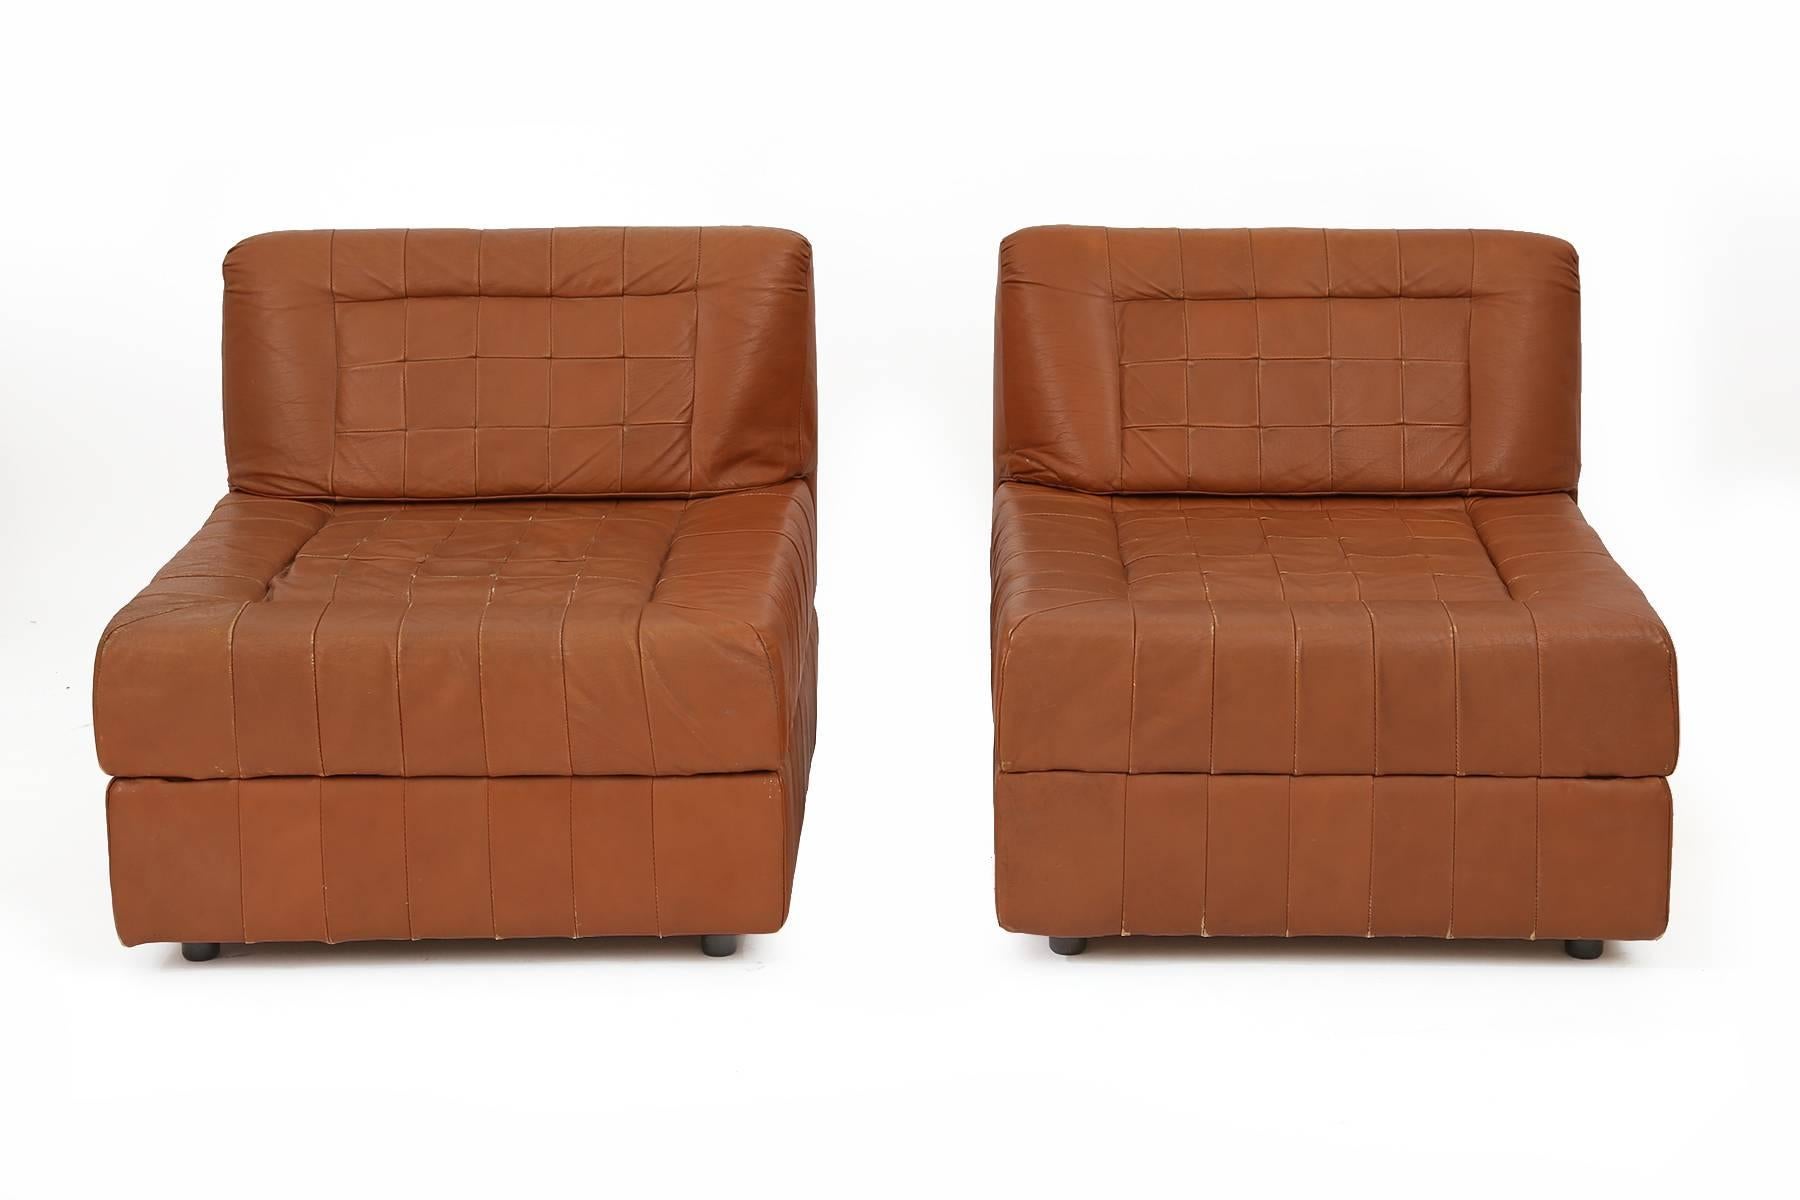 Brazilian Percival Lafer Patchwork Leather Sofa